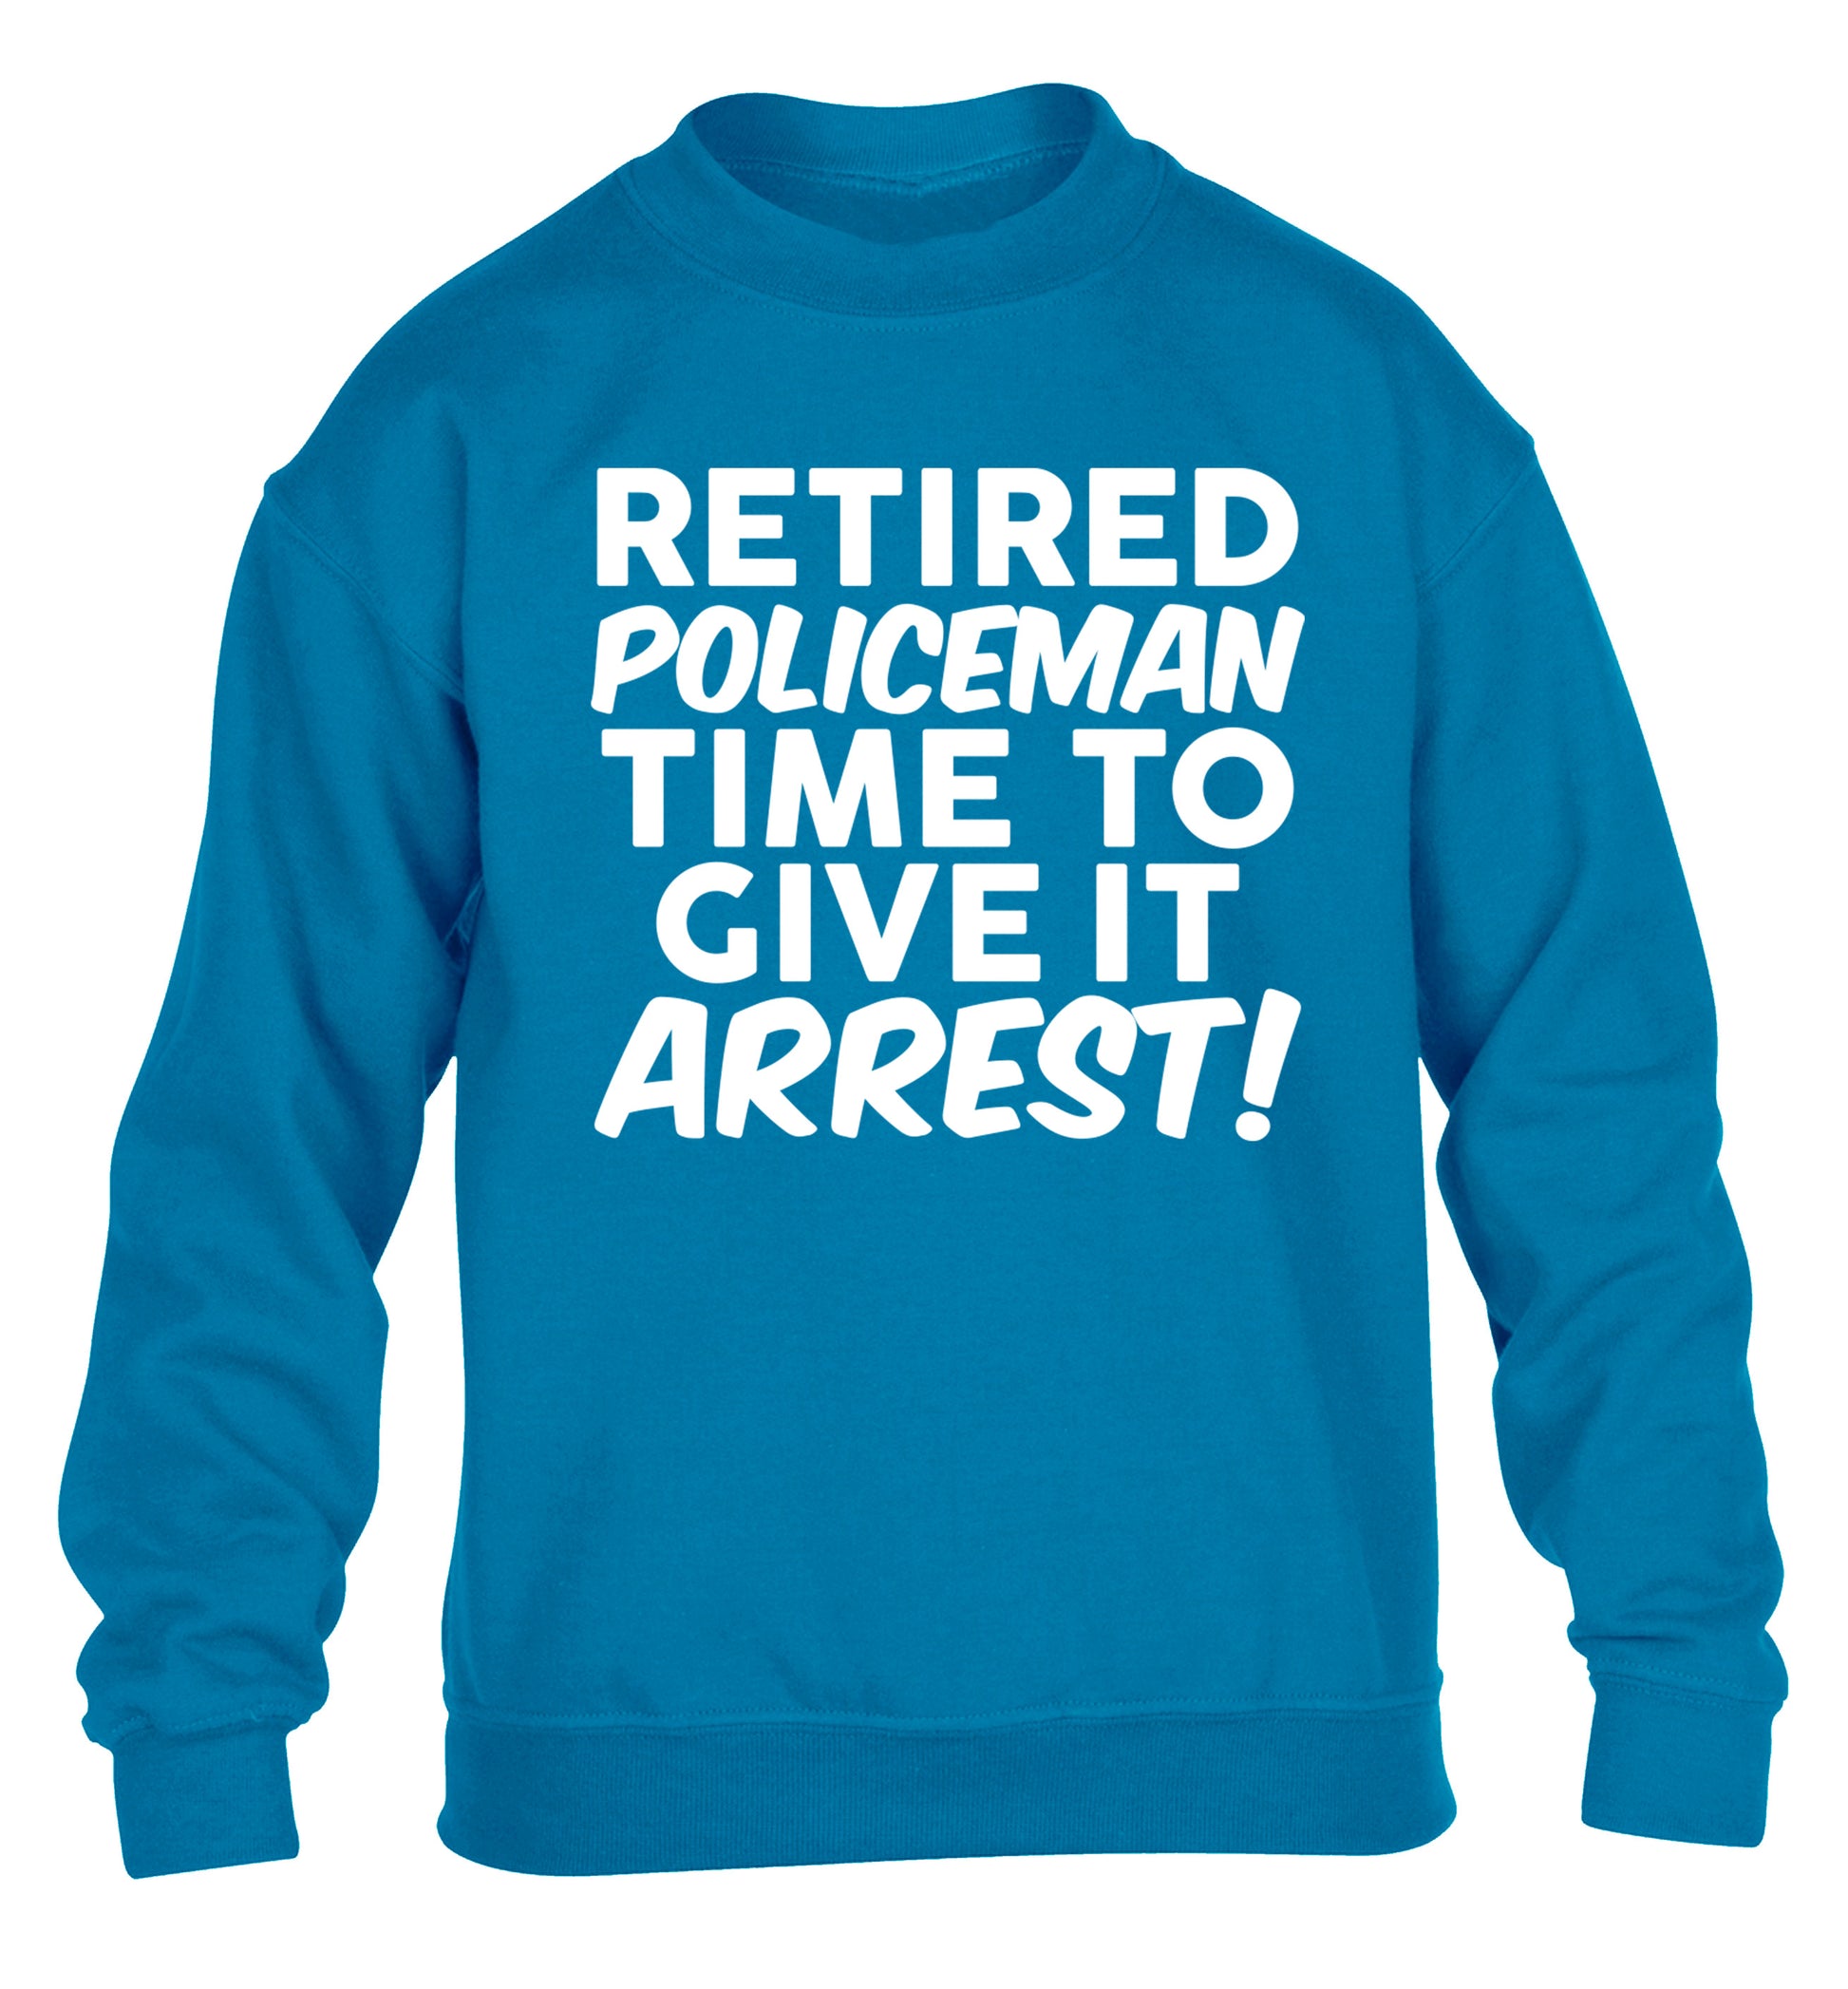 Retired policeman give it arresst! children's blue sweater 12-13 Years